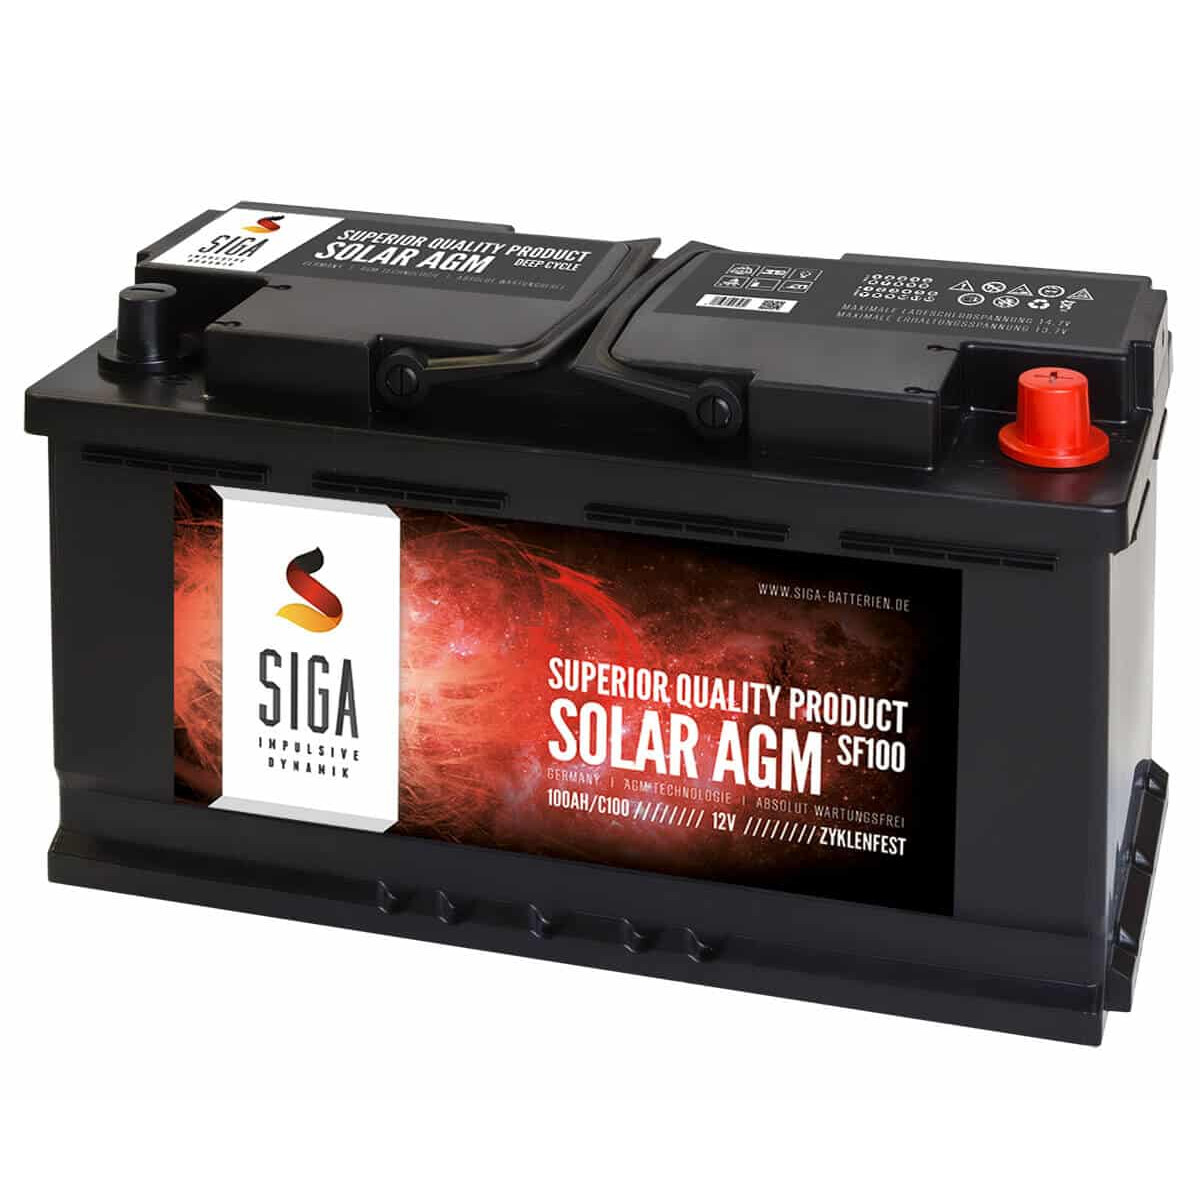 SIGA SOLAR AGM Batterie SF100 12V 100Ah online jetzt bei PrimeSolar